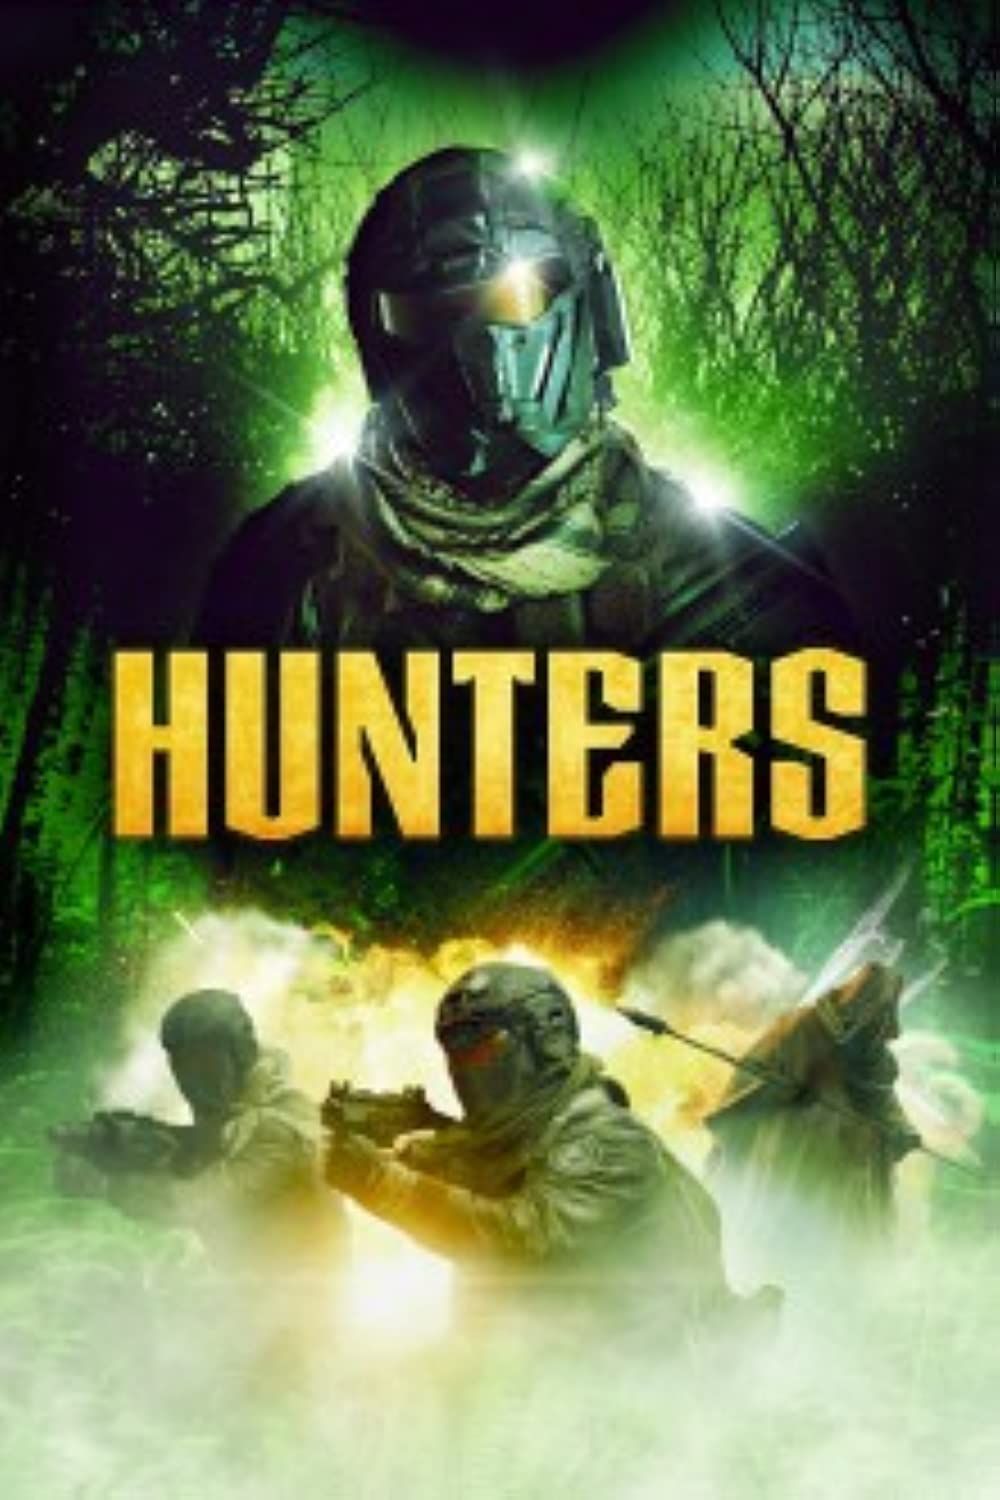 Hunters (2021) Hindi Dubbed BluRay download full movie